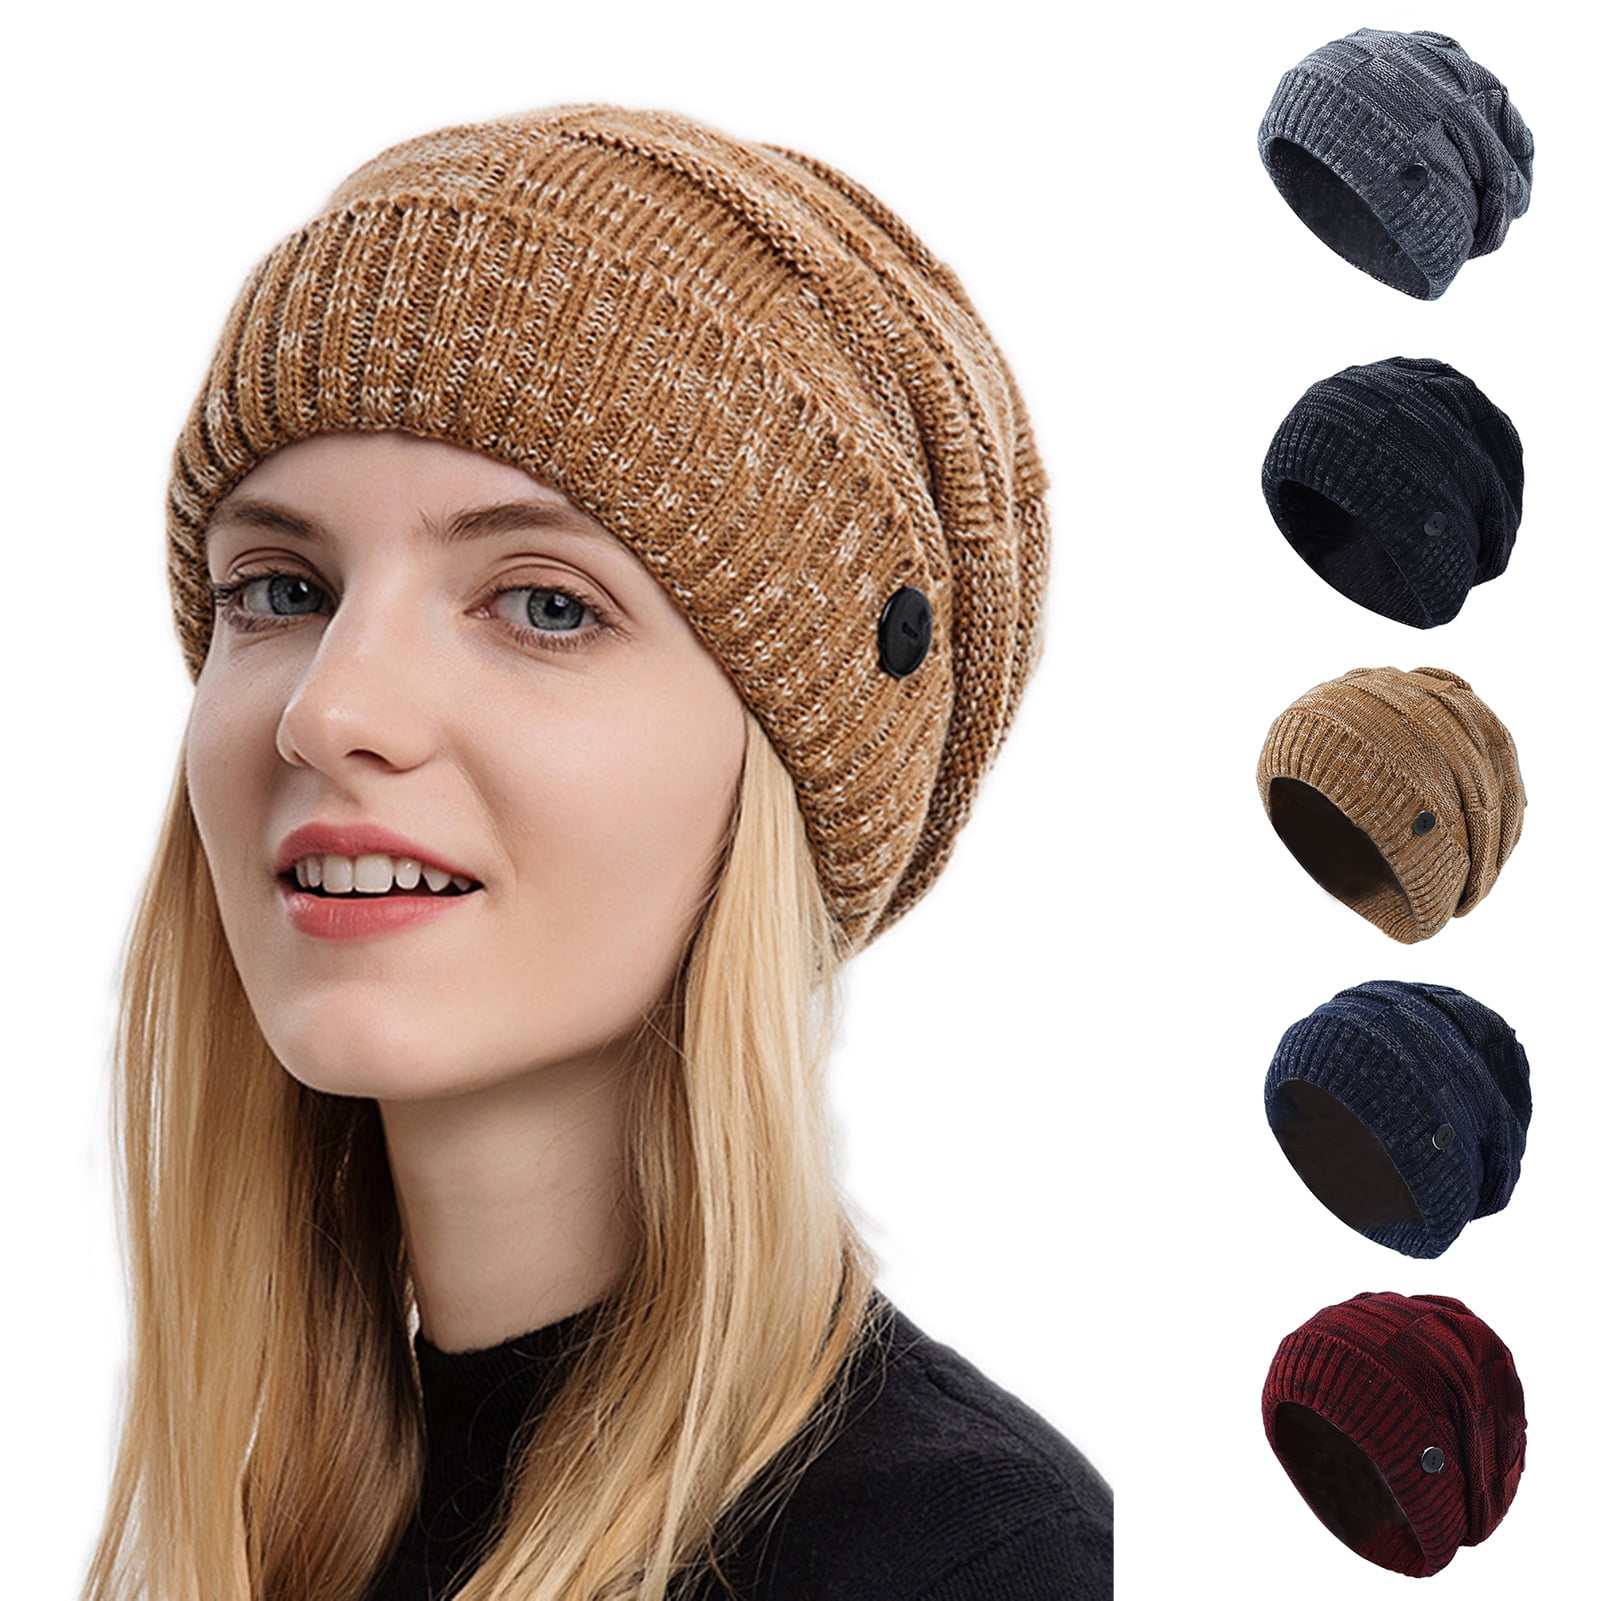 JOYFEEL Winter Fall Knit Hats for Women Men Unisex Warm Stretchy Slouchy Fleece Lined Thick Beanie Skull Ski Caps 